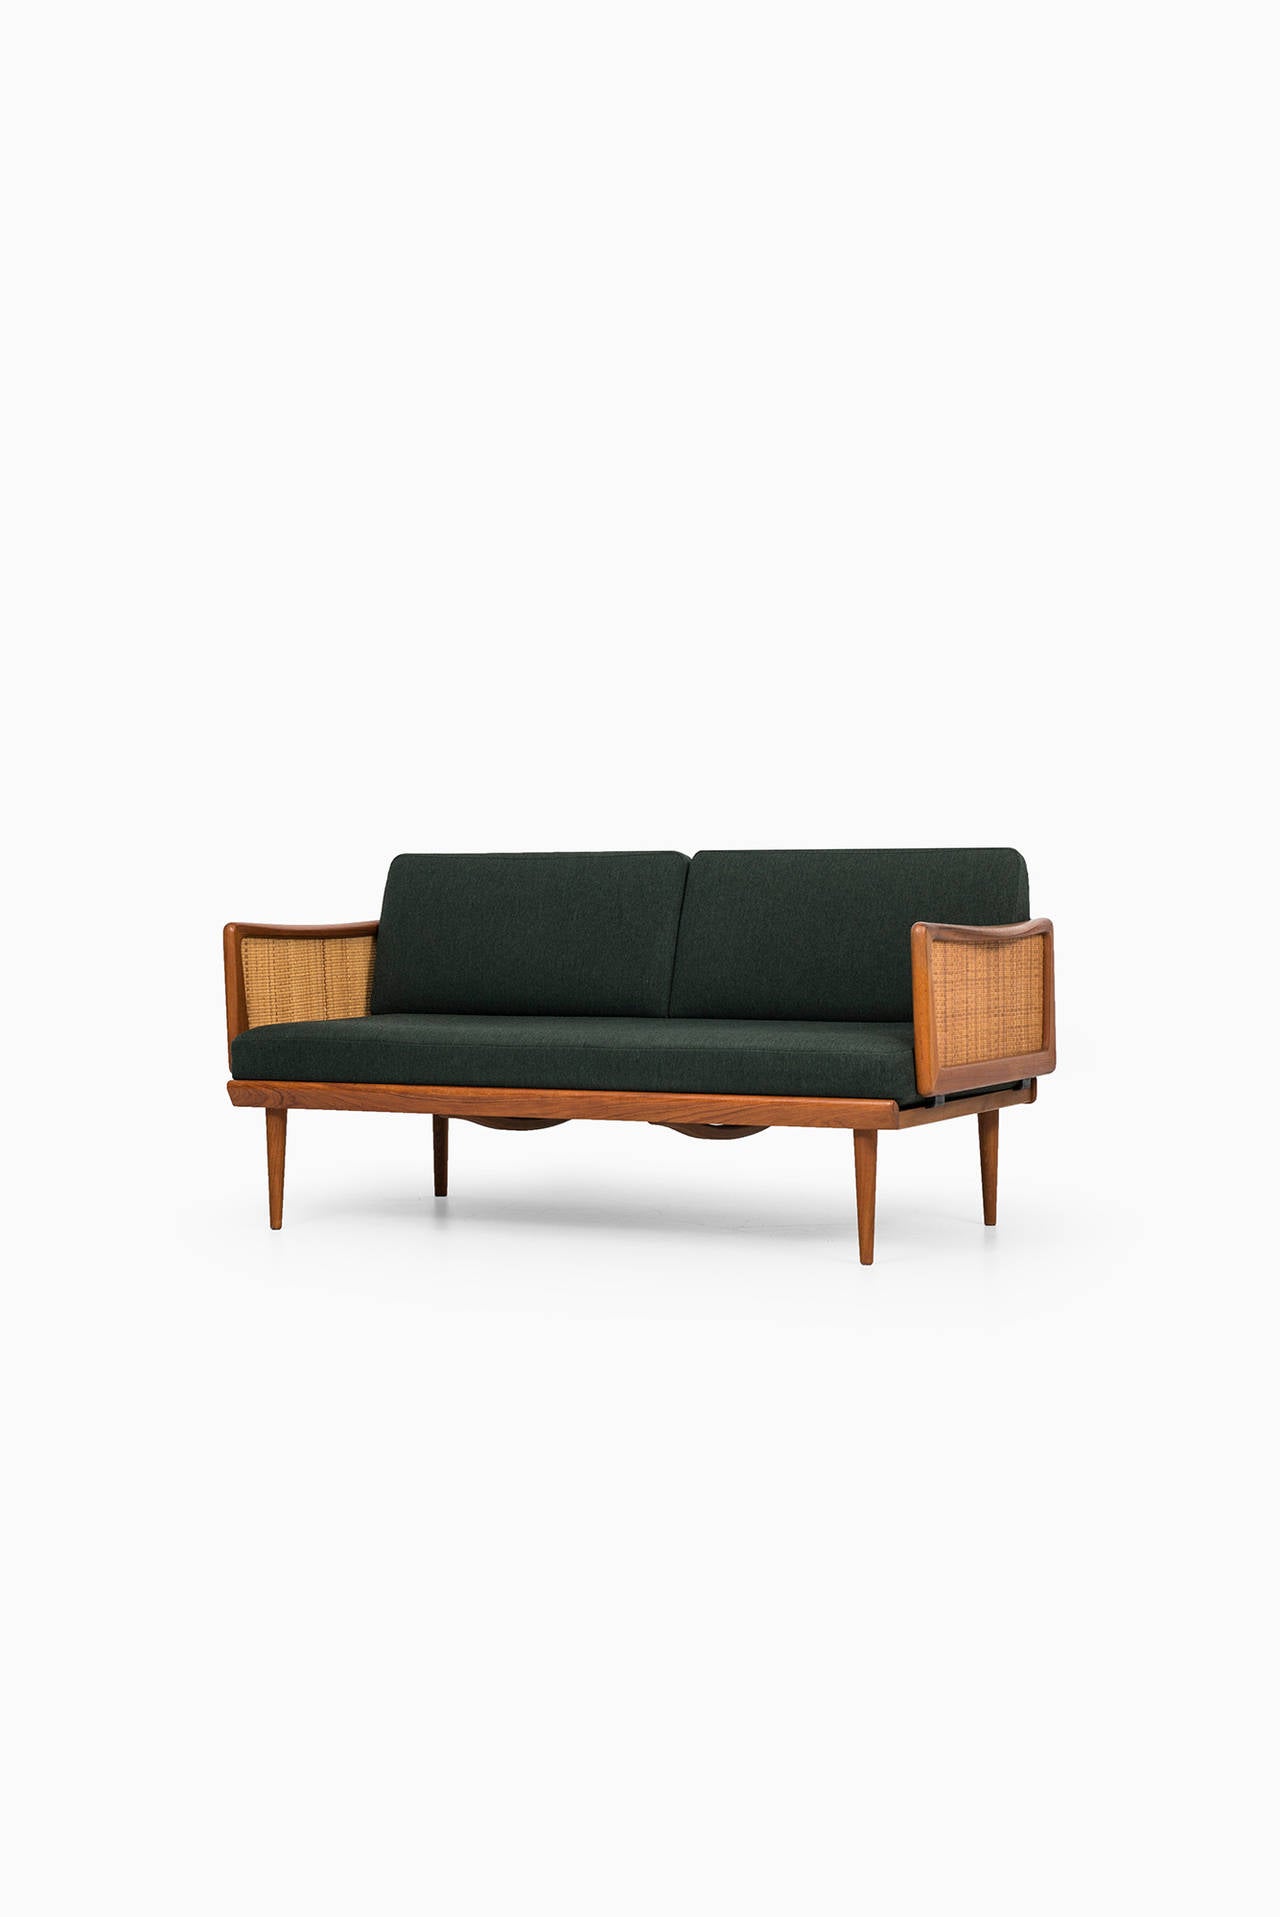 Mid-Century Modern Peter Hvidt & Orla Mølgaard-Nielsen sofa model FD 451